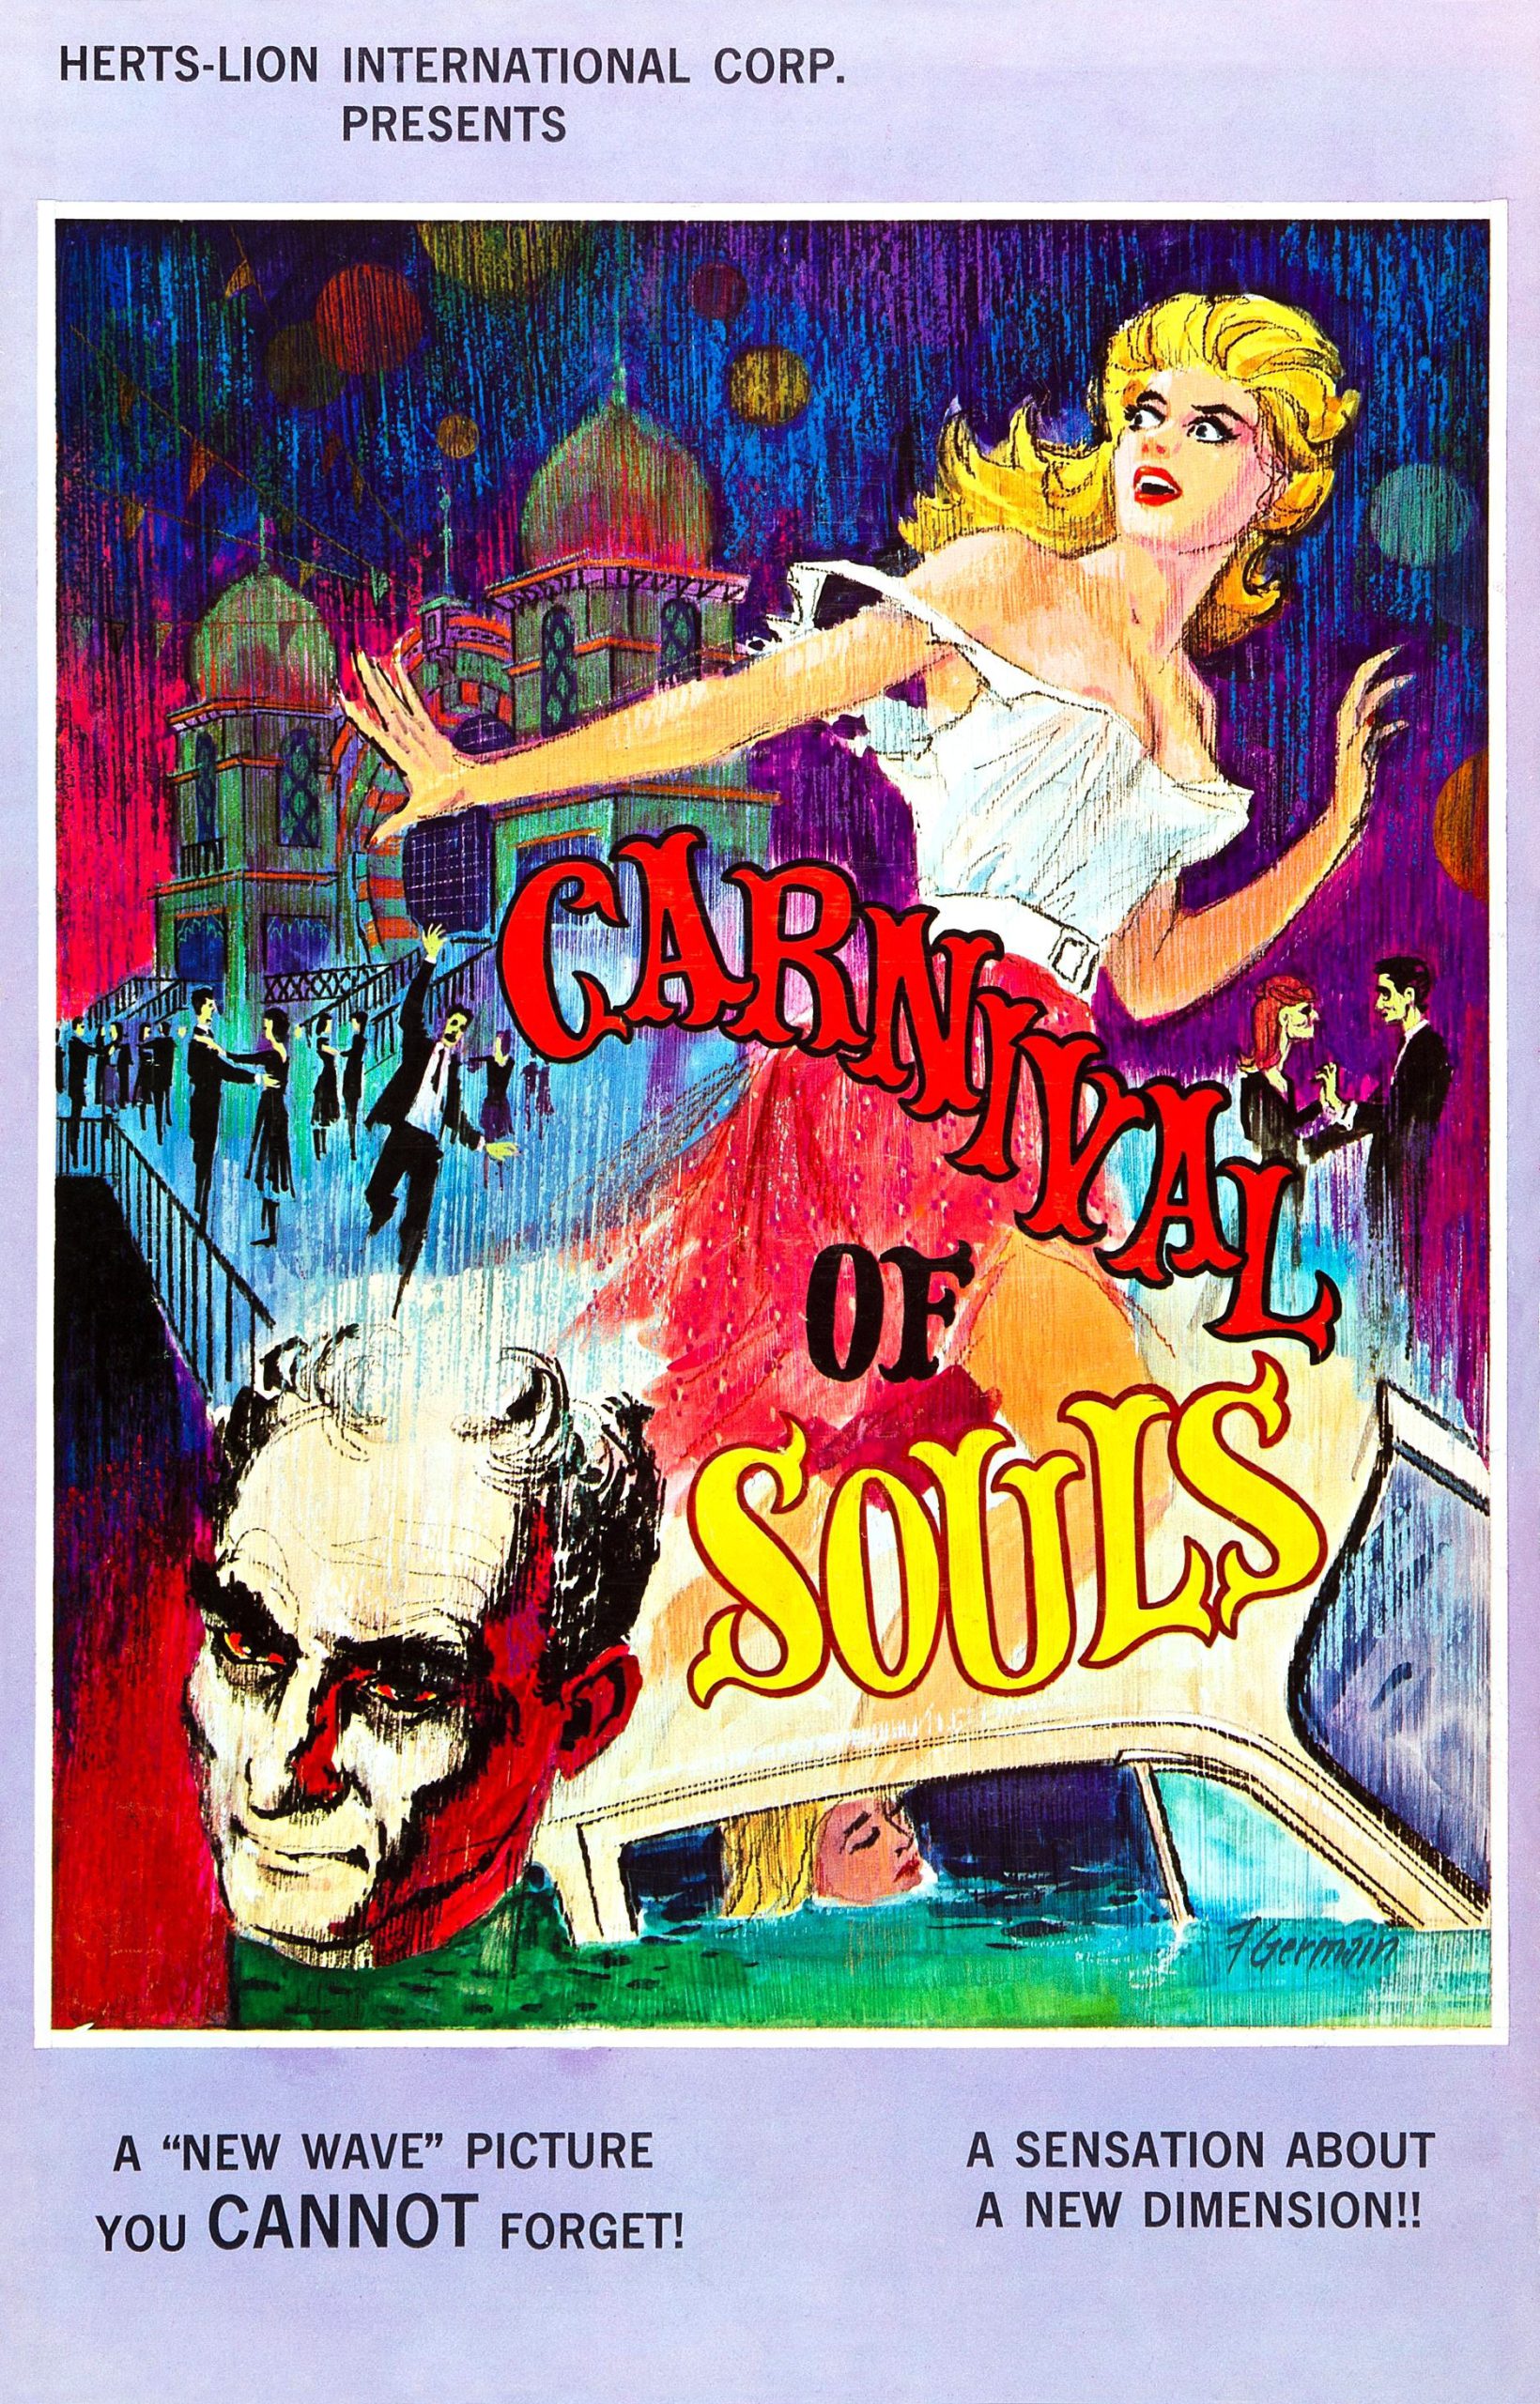 L’horror low budget e surrealista di “Carnival of souls”